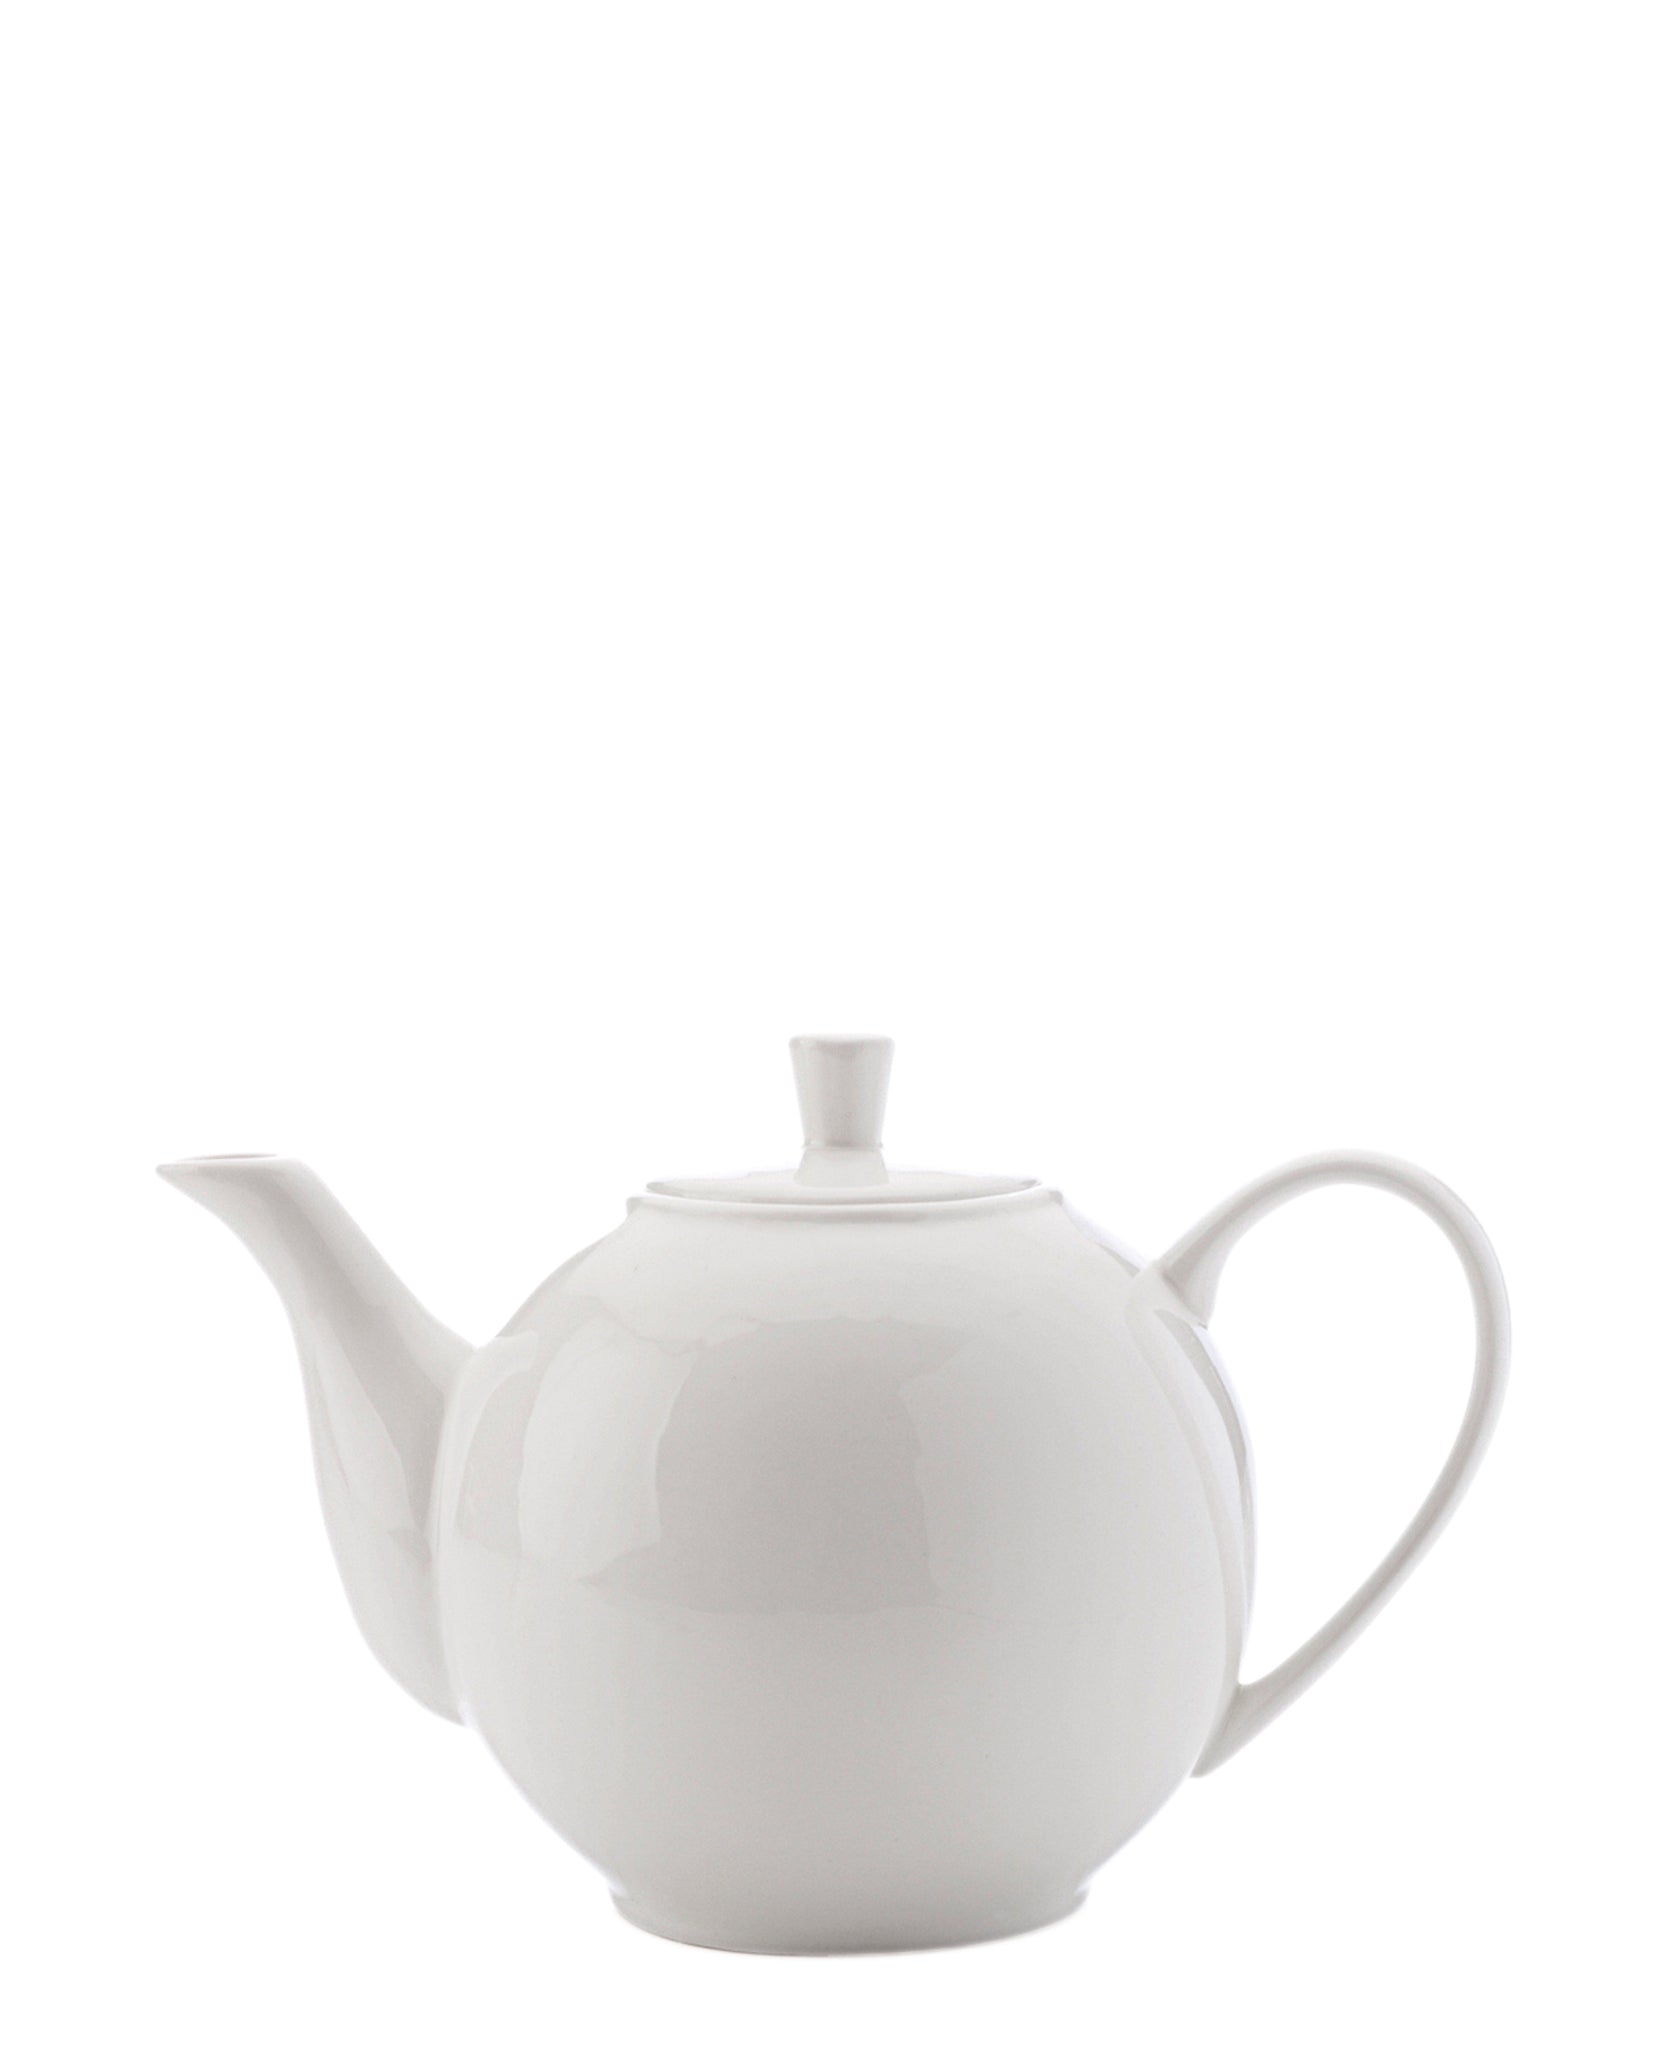 Maxwell & Williams Infusions Tea Pot - White